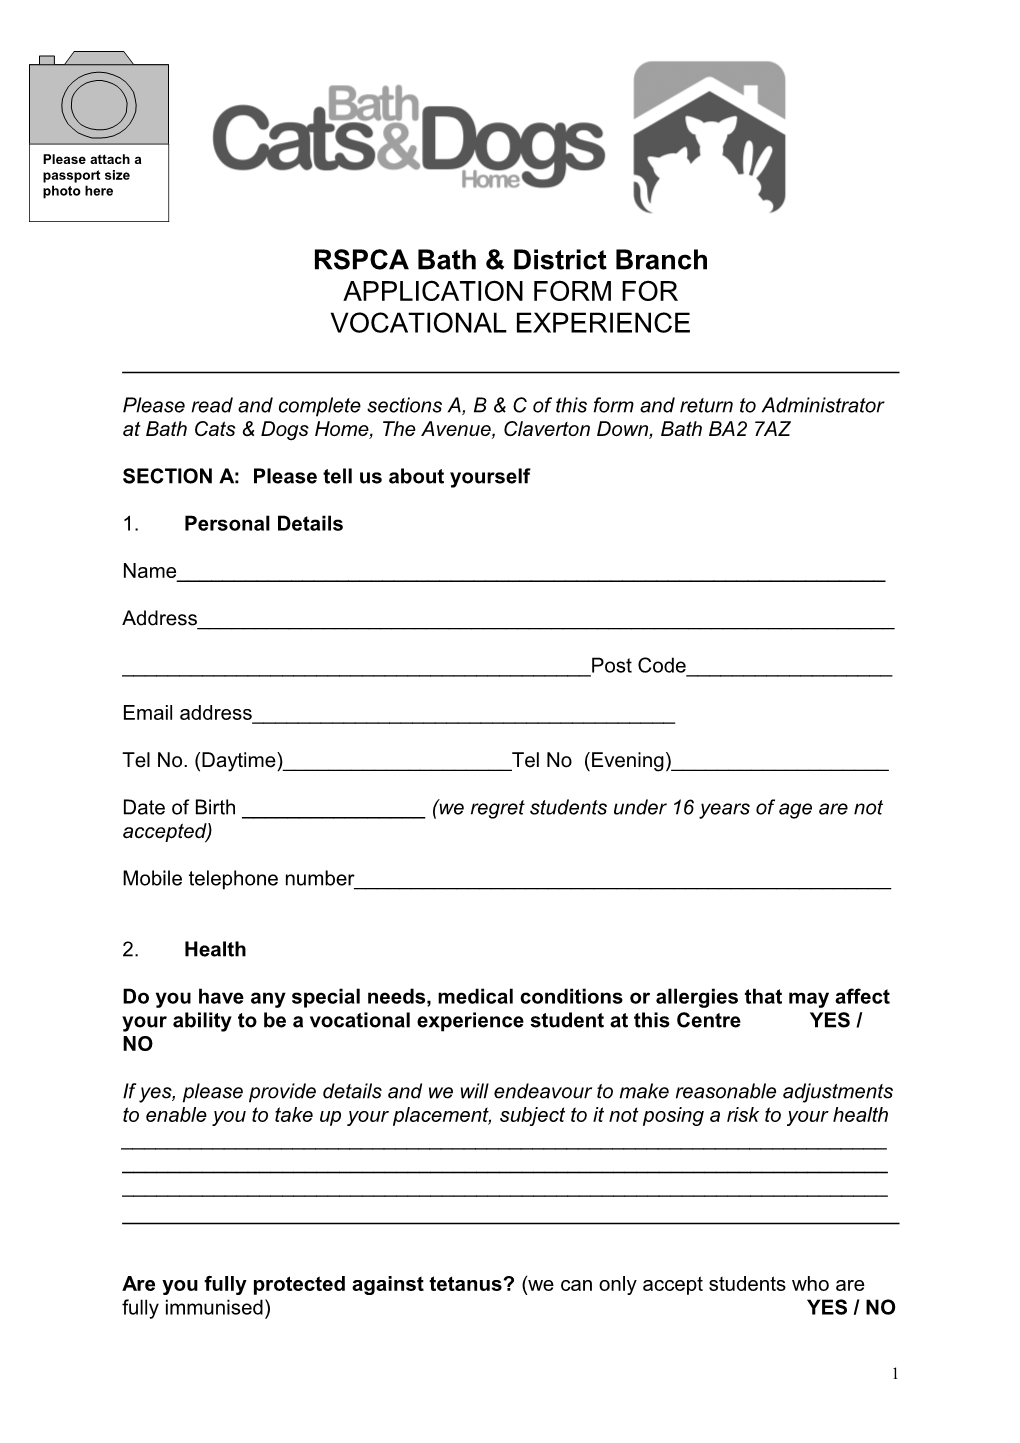 RSPCA Bath & District Branch